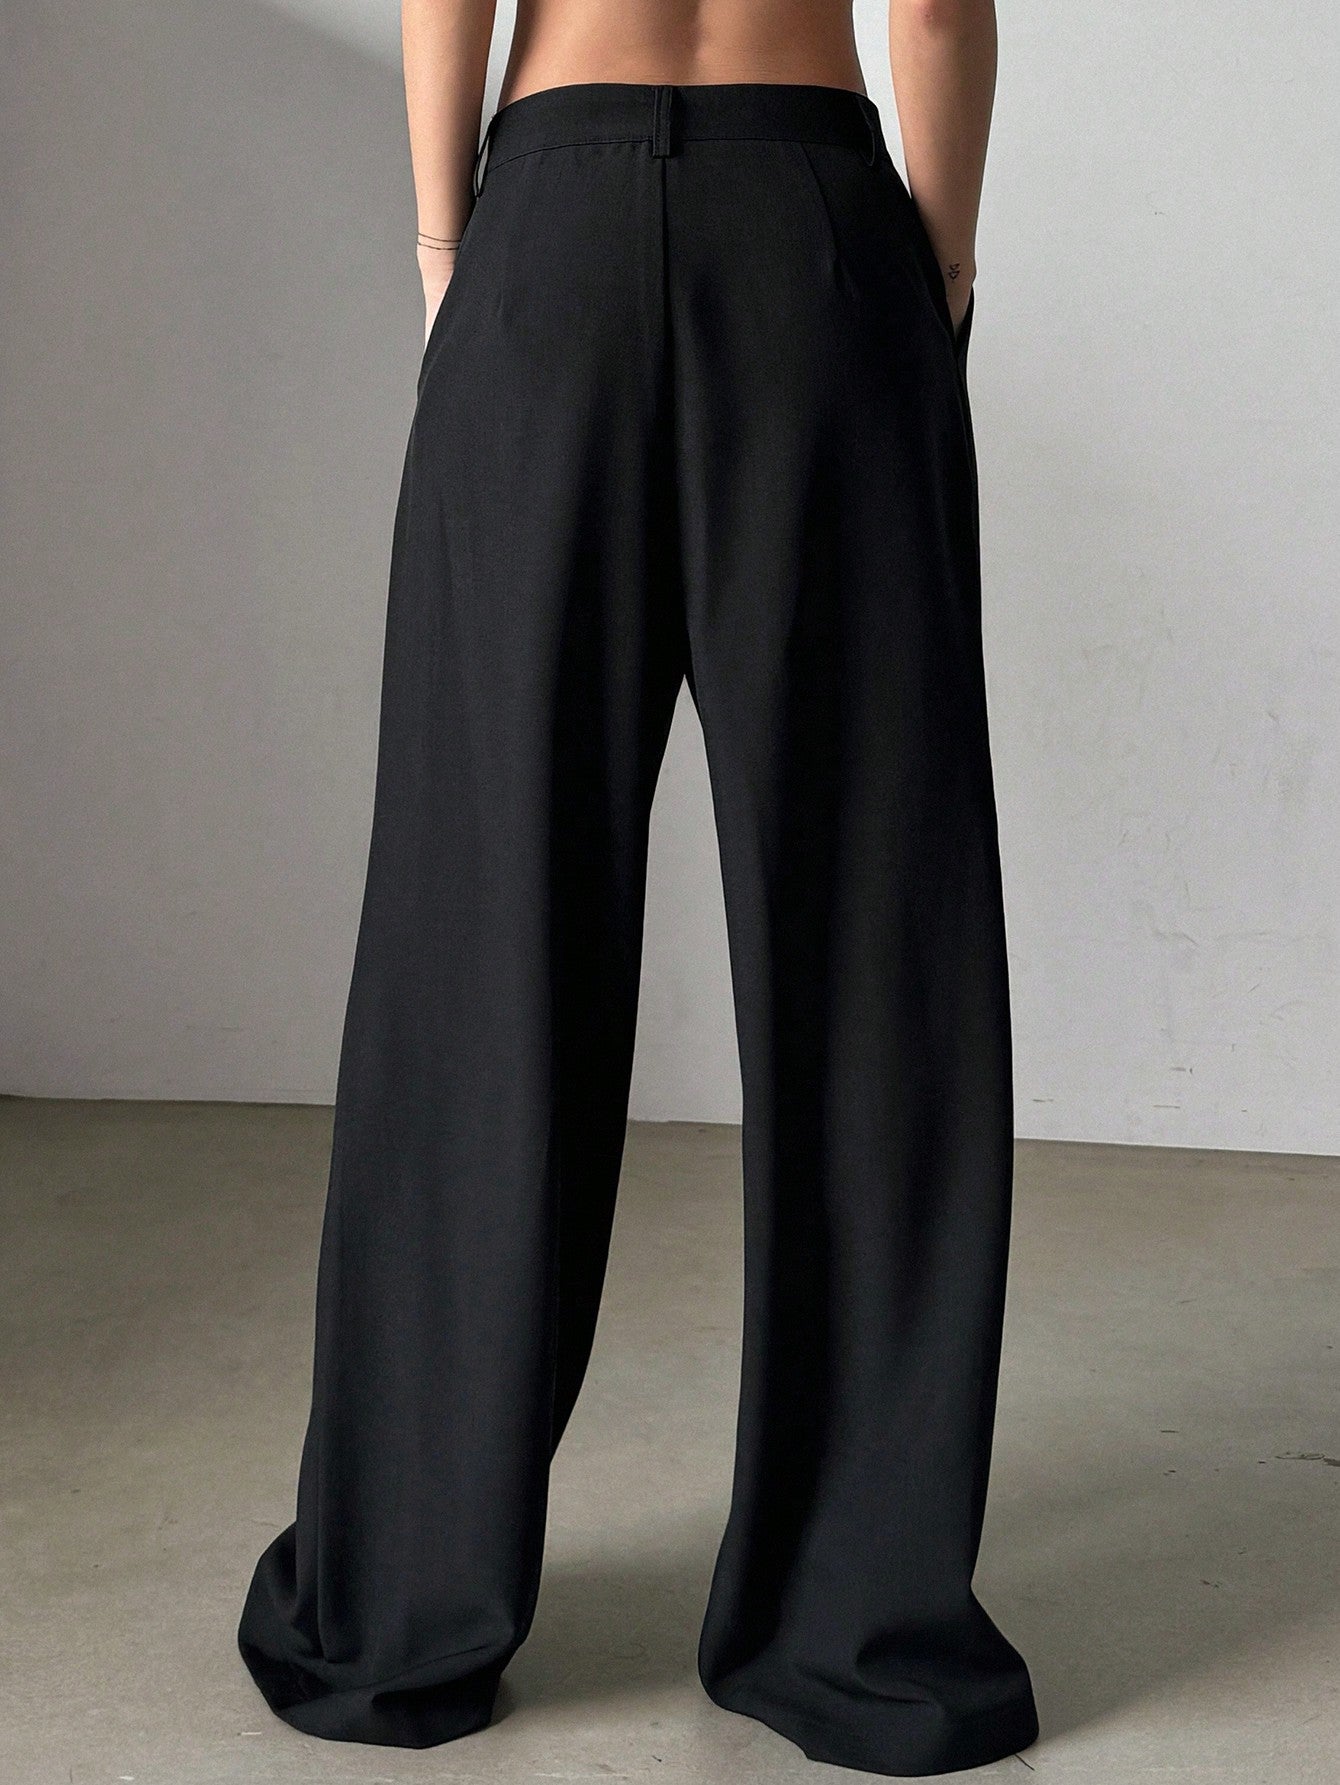 Solid Color Women's Suit Pants With Slanted Placket